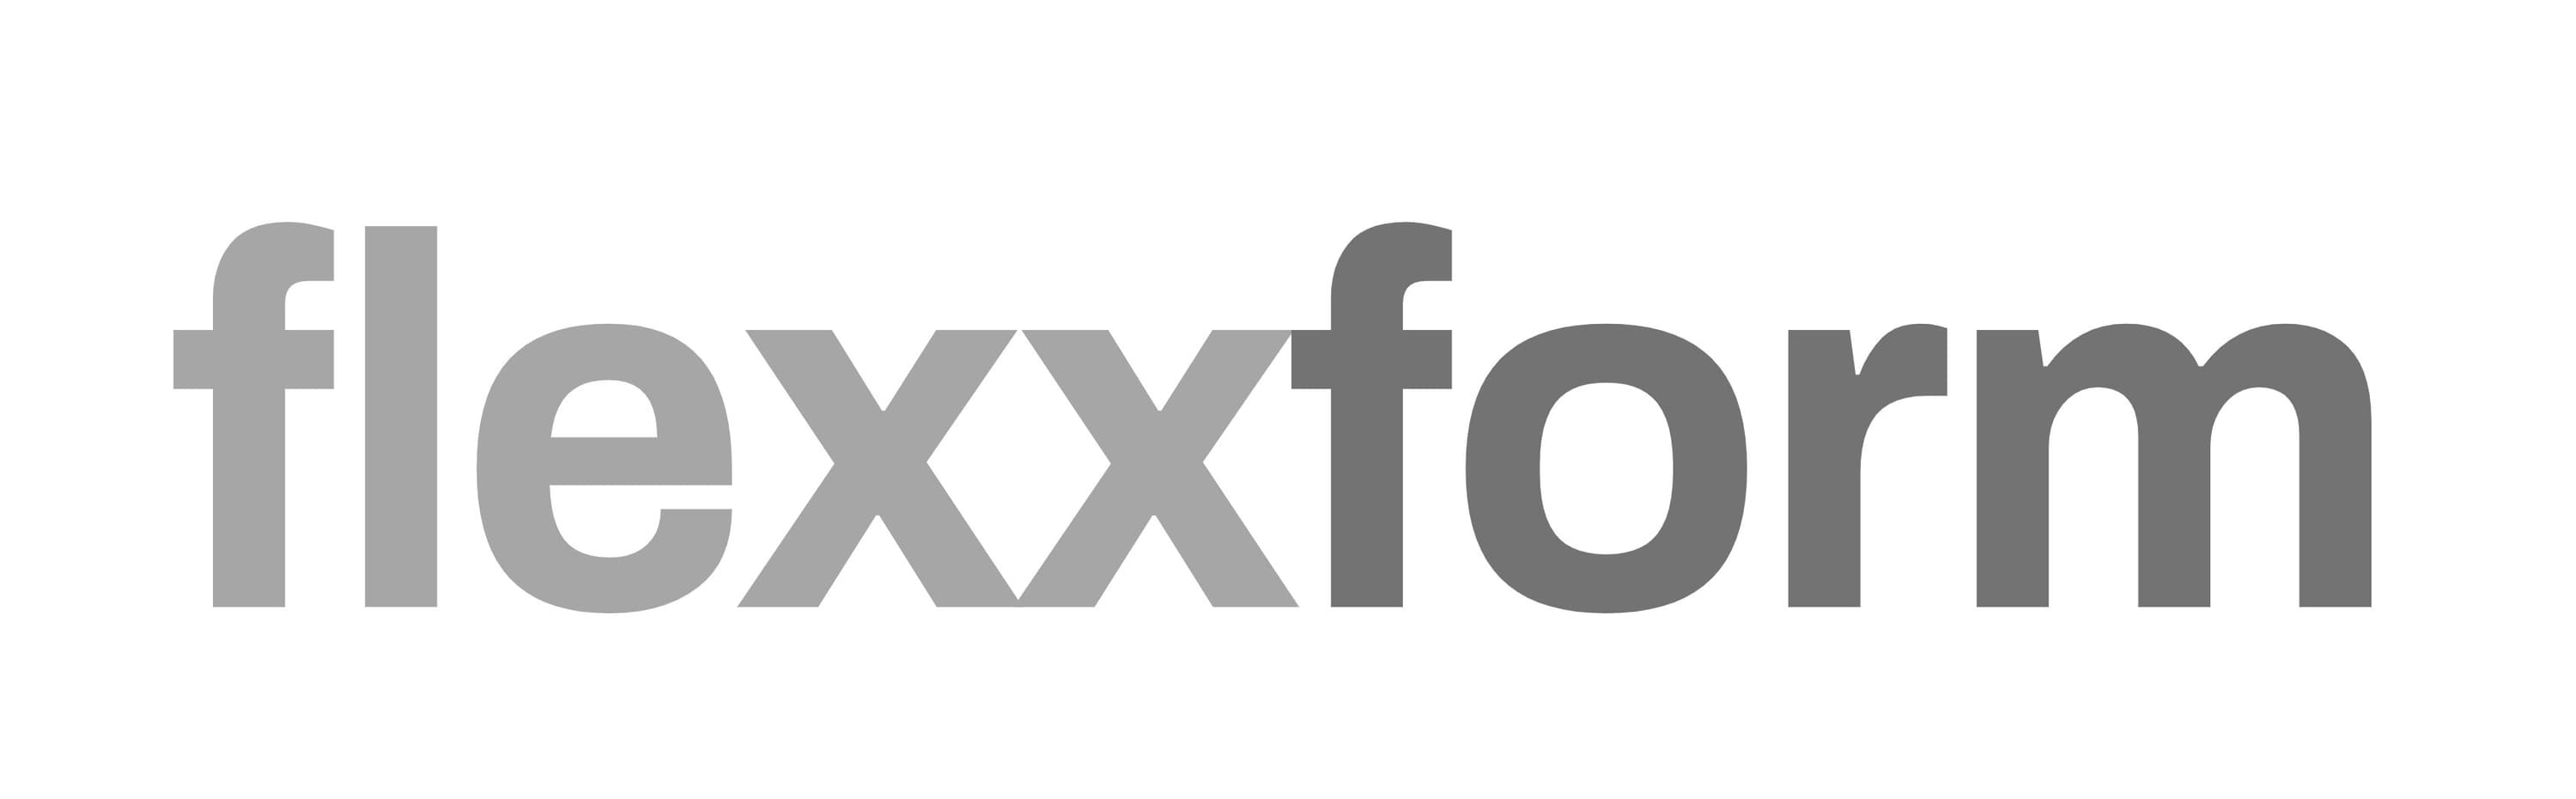 Flexxform Logo